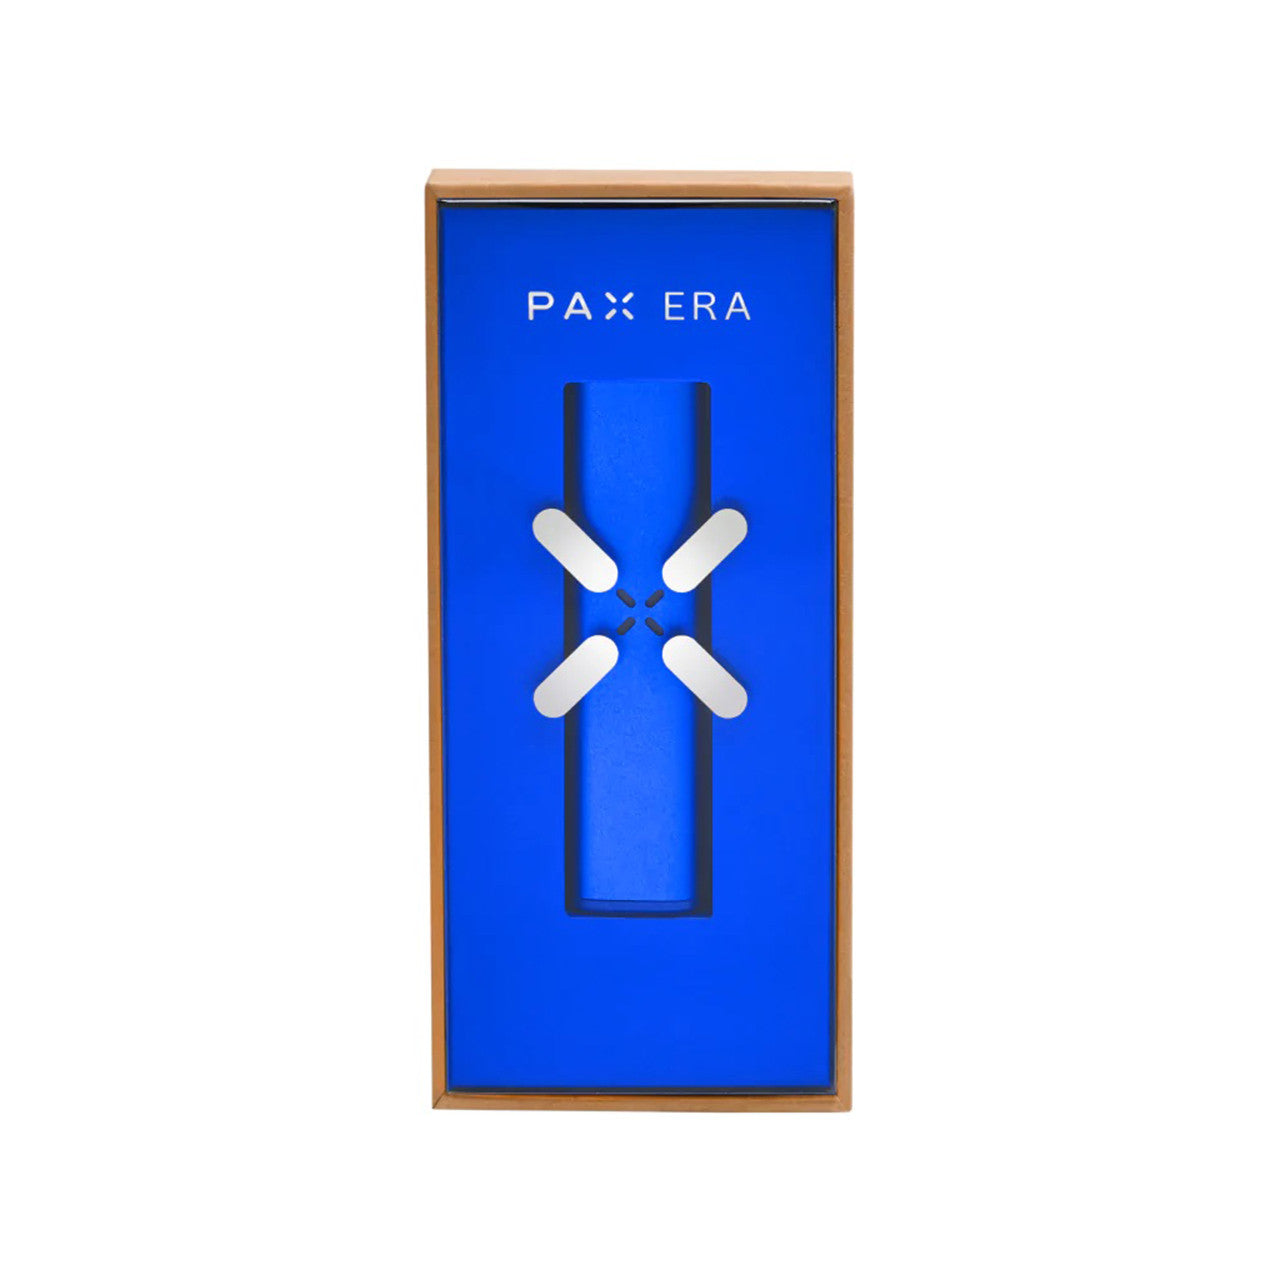 PAX - Era Vaporizer Kit - Online Vape Shop | Alternative pods | Affordable Vapor Store | Vape Disposables